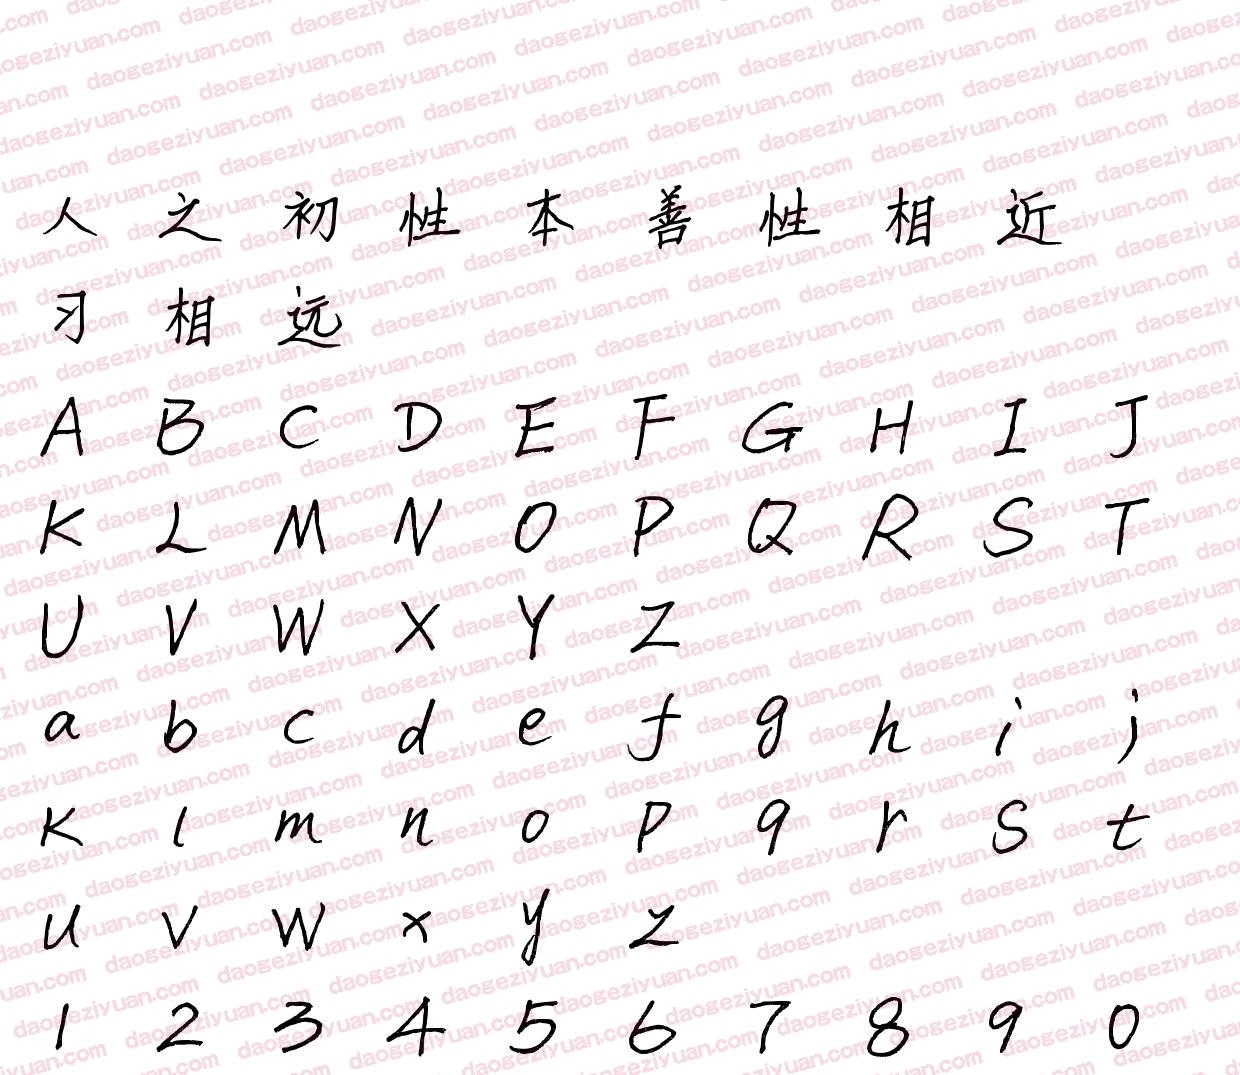 Zhang Weijing's handwritten regular script